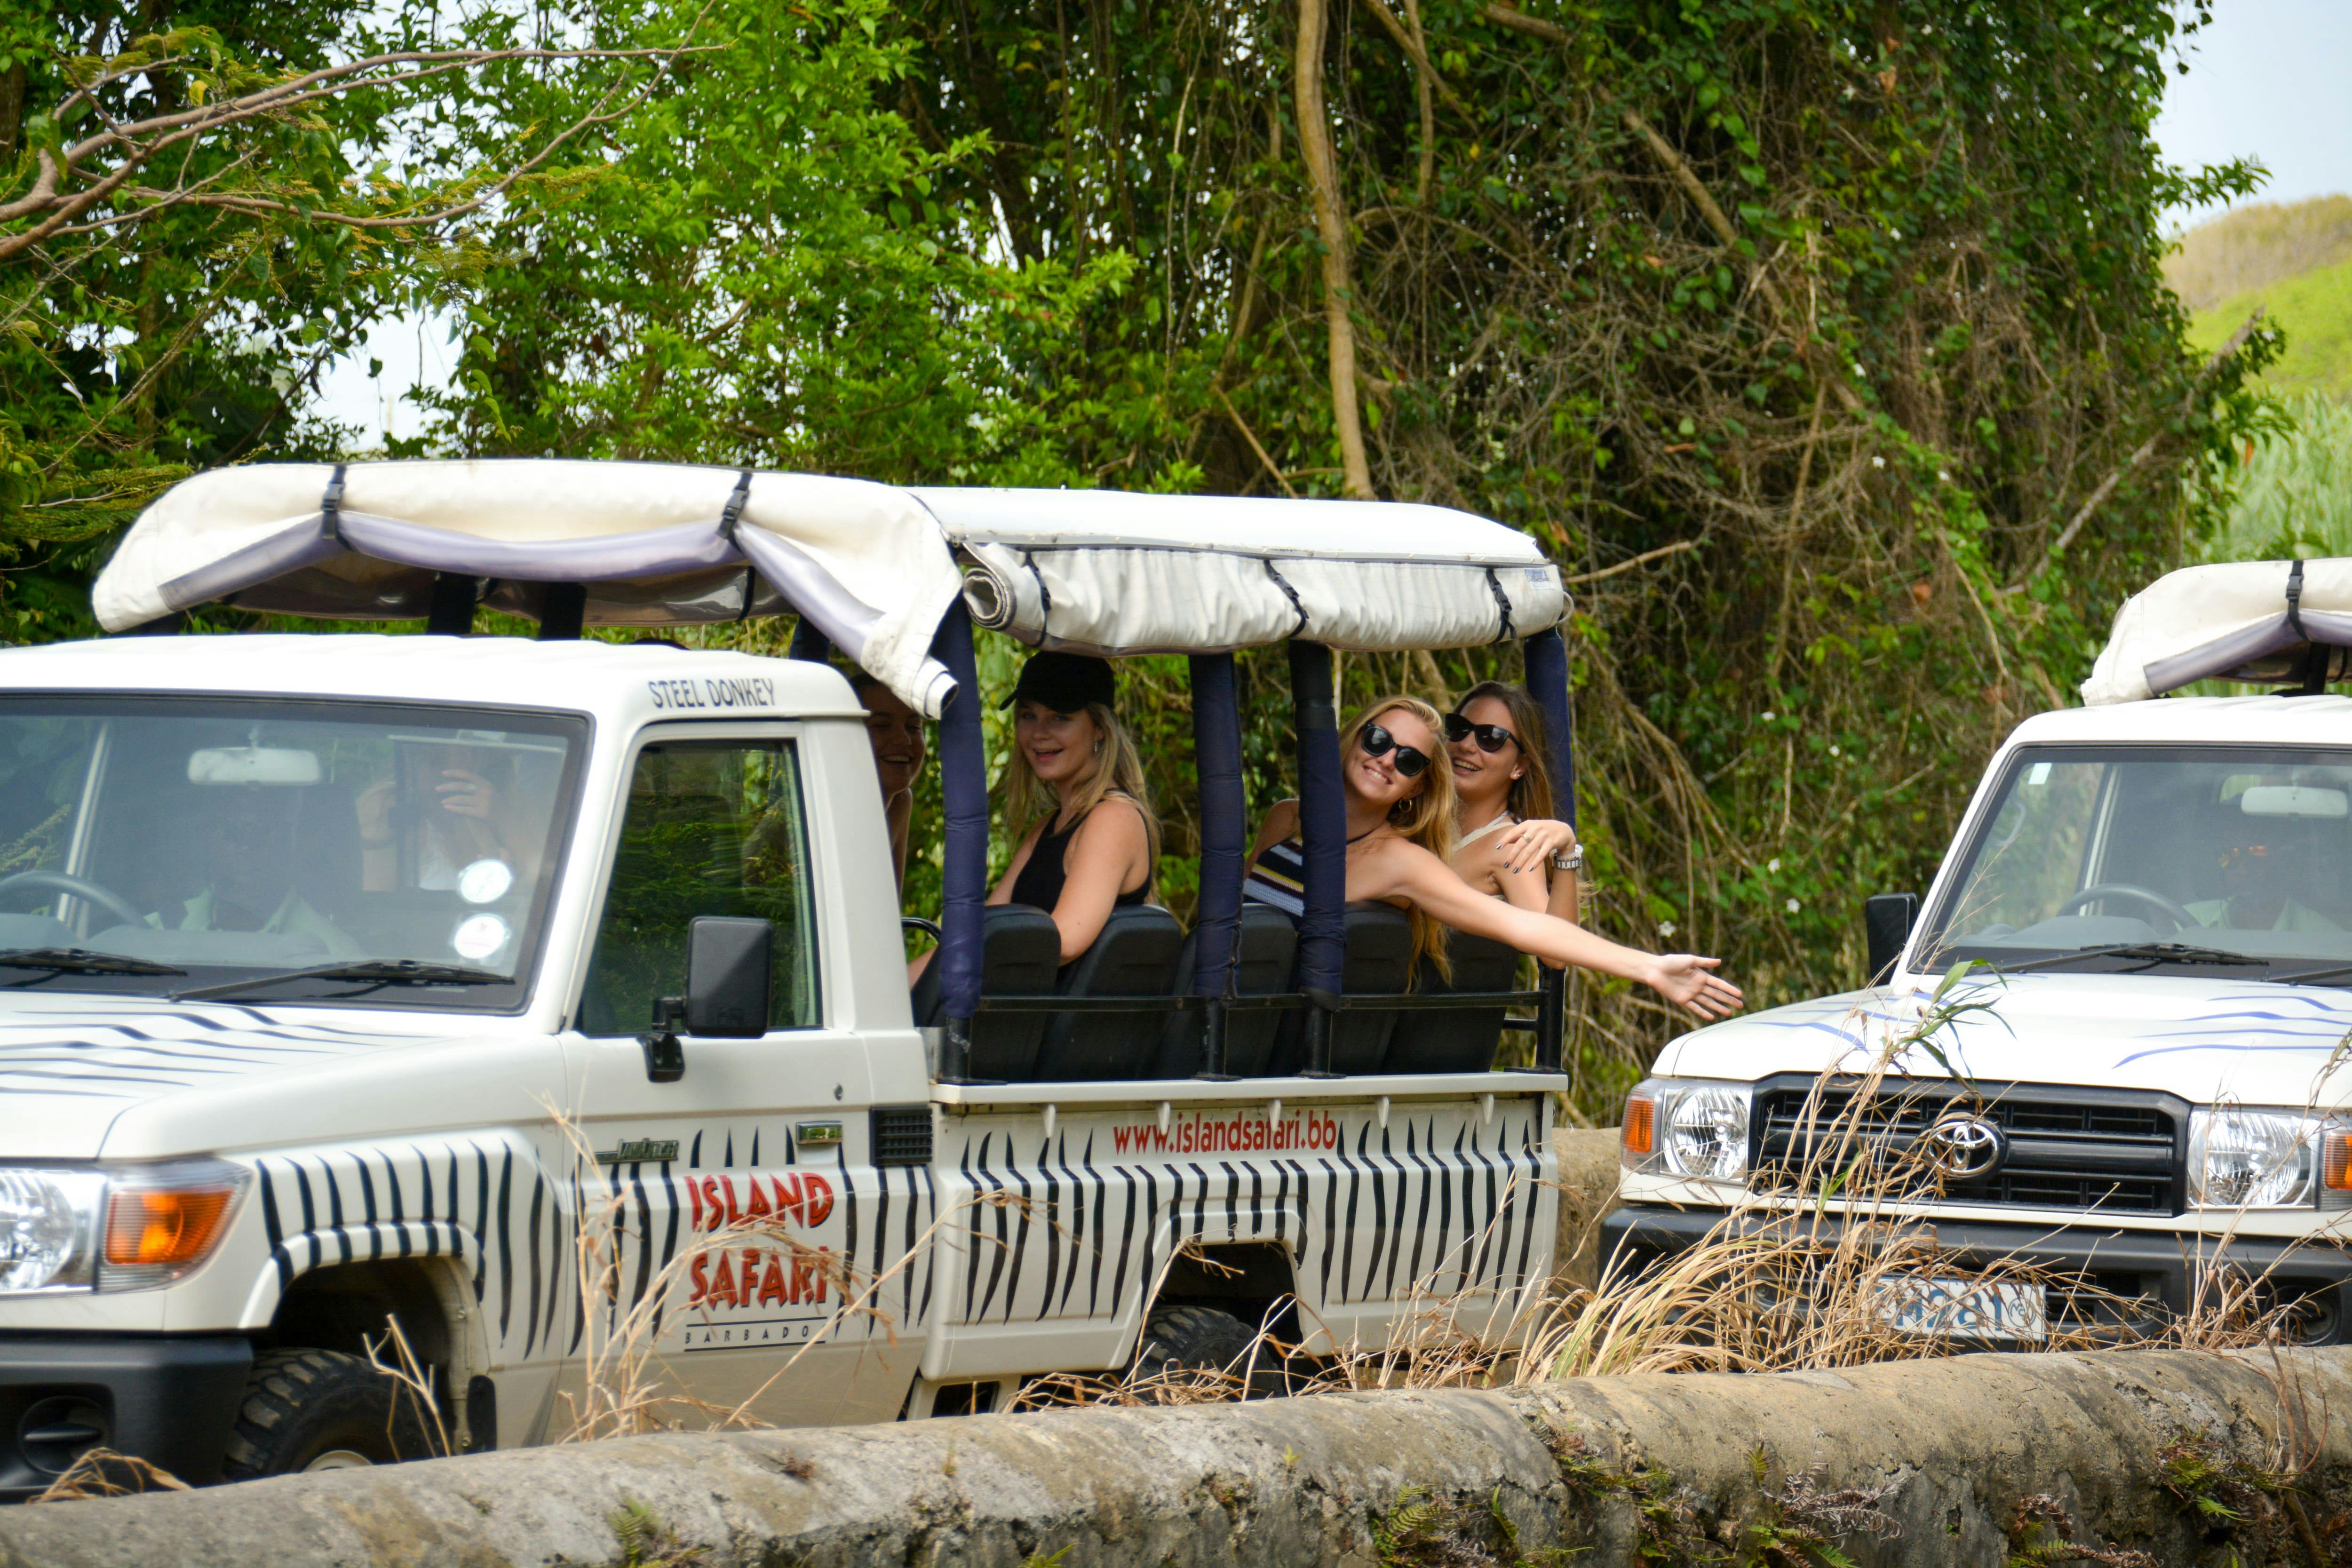 Barbados Island 4x4 Safari Tour